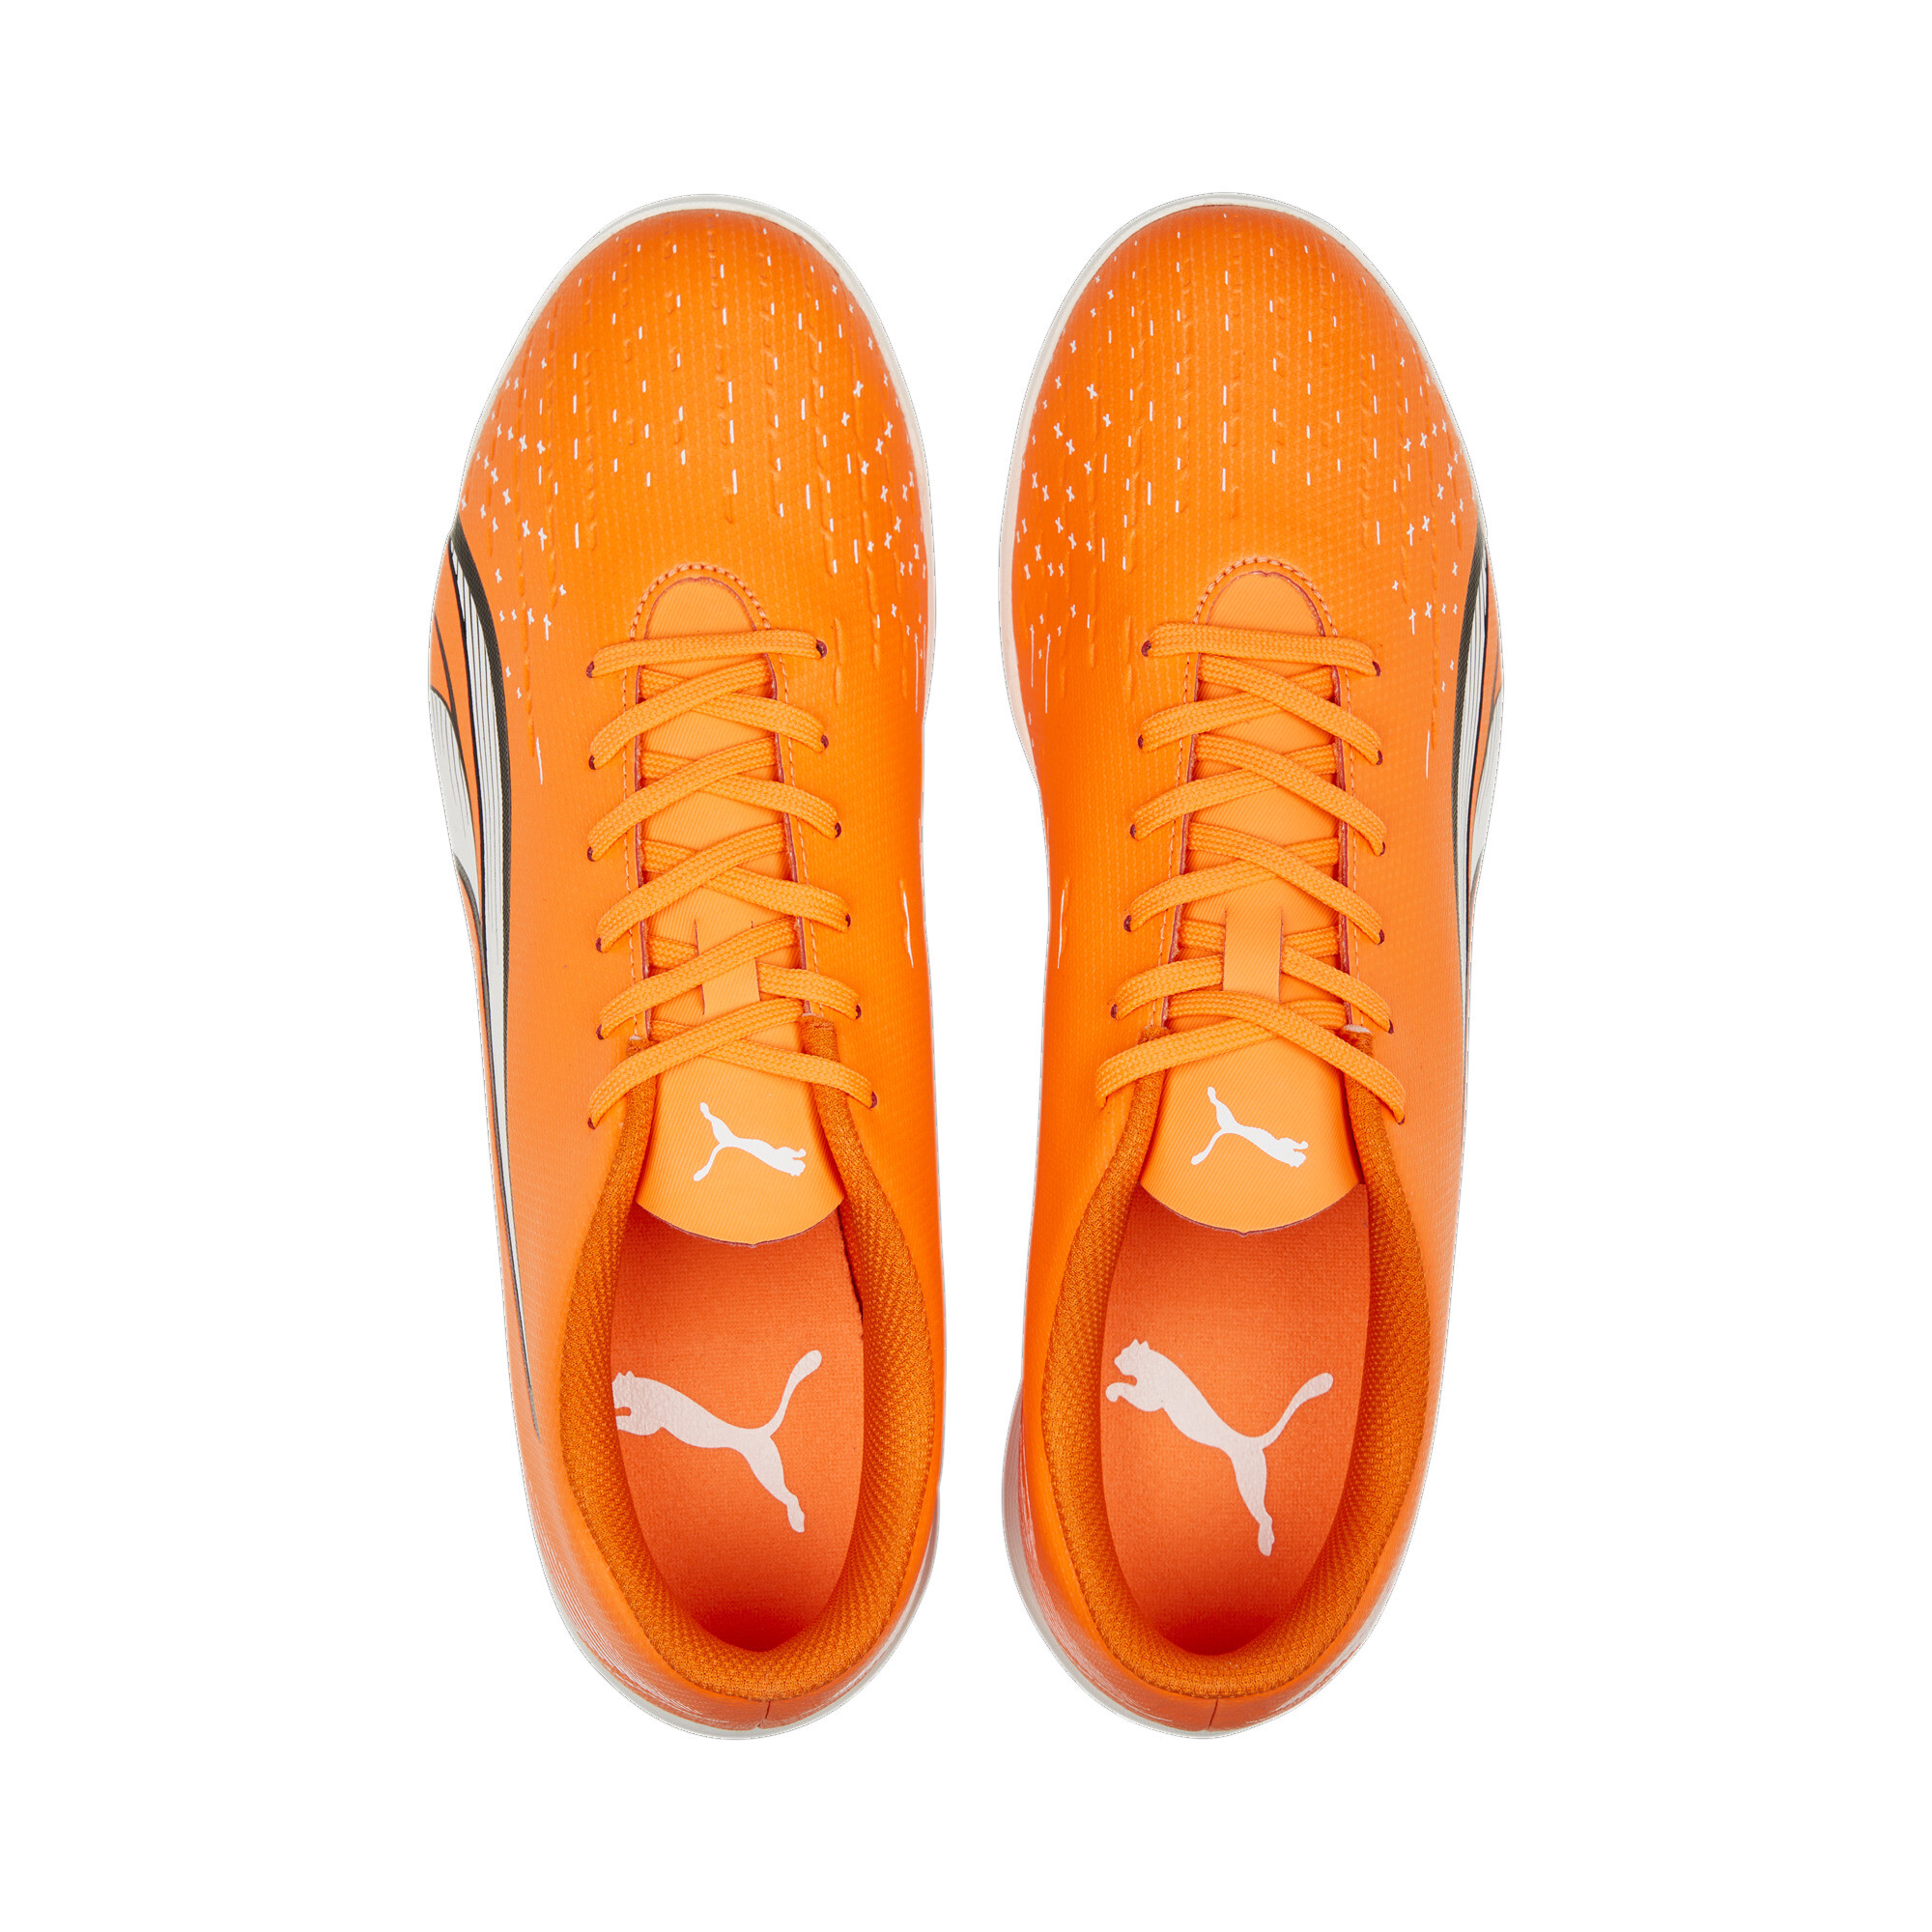 Men's PUMA ULTRA Play TT Football Boots Men In Orange, Size EU 40.5